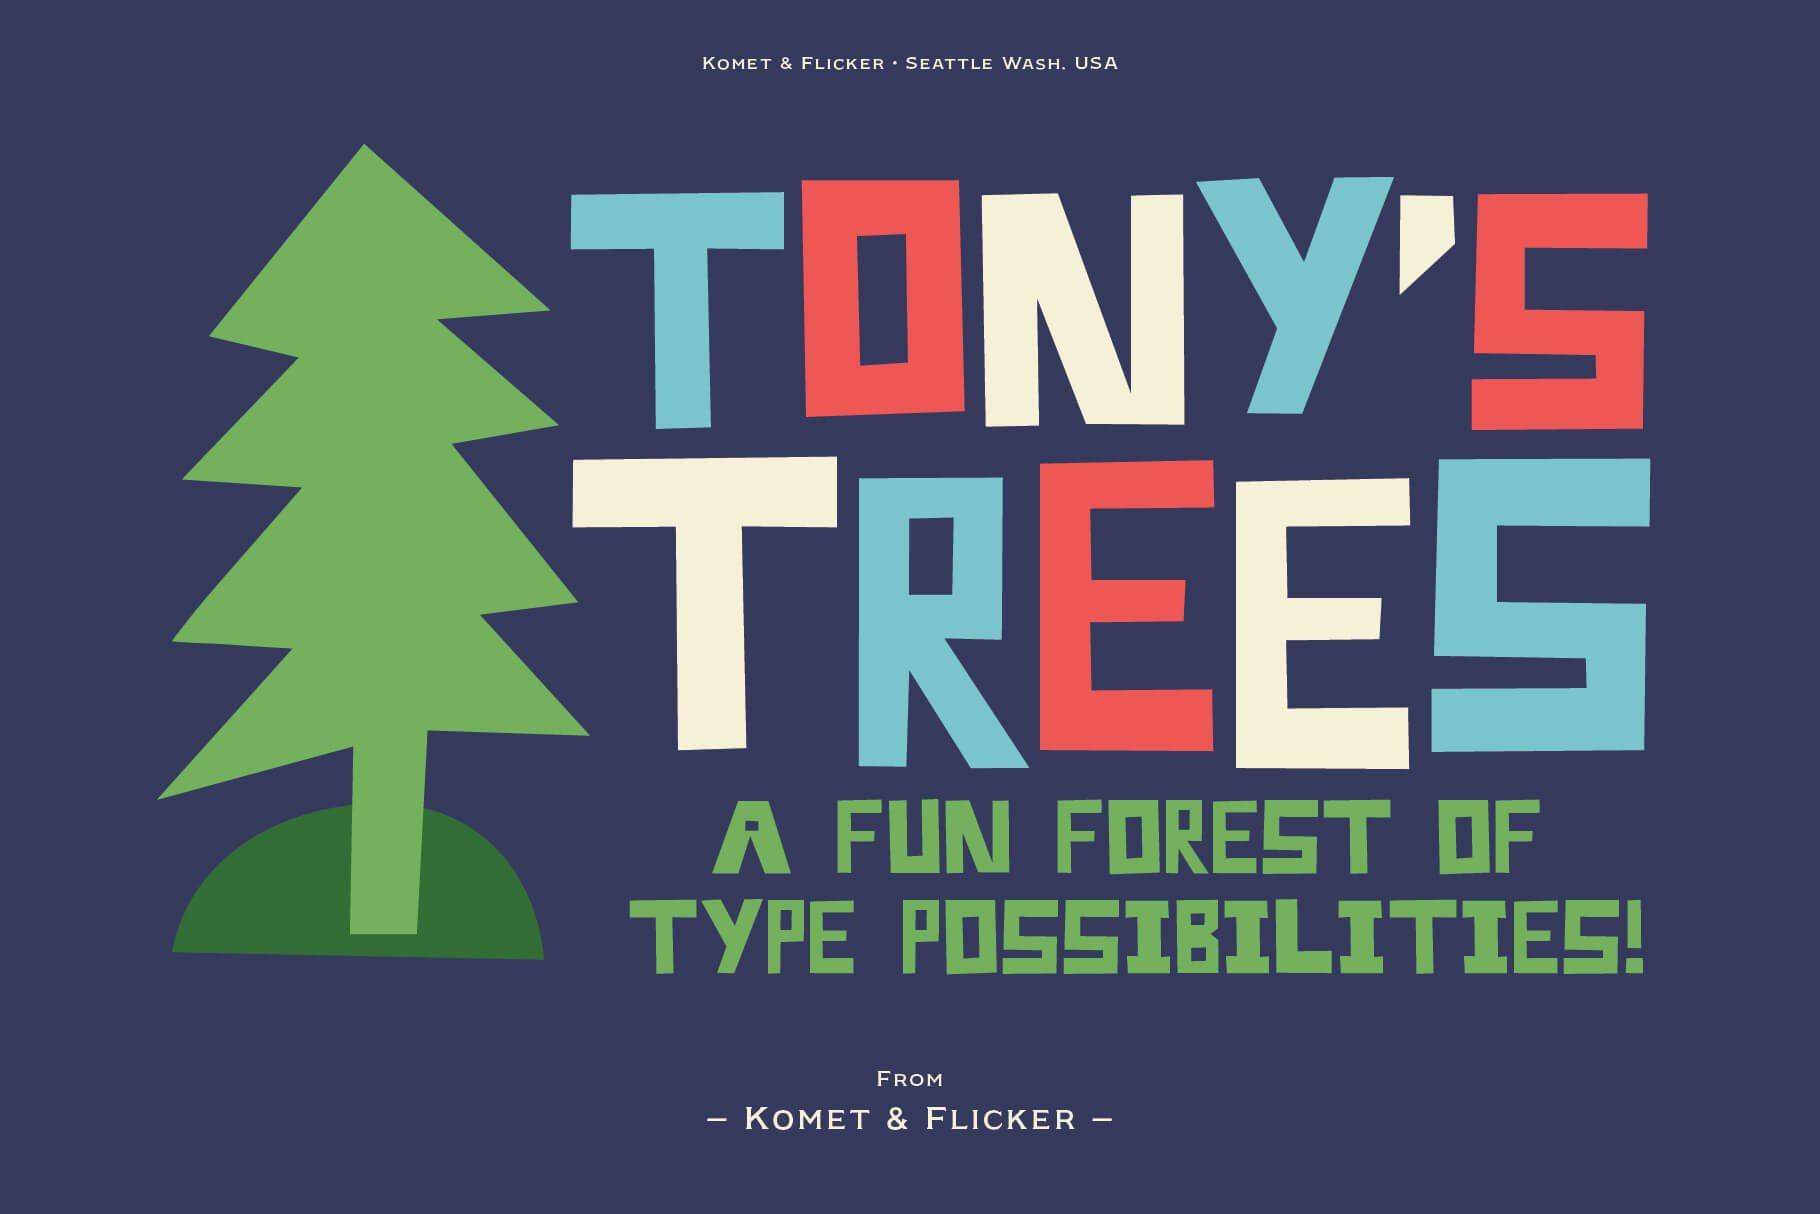 Tony's Trees - Fun Display Font cover image.